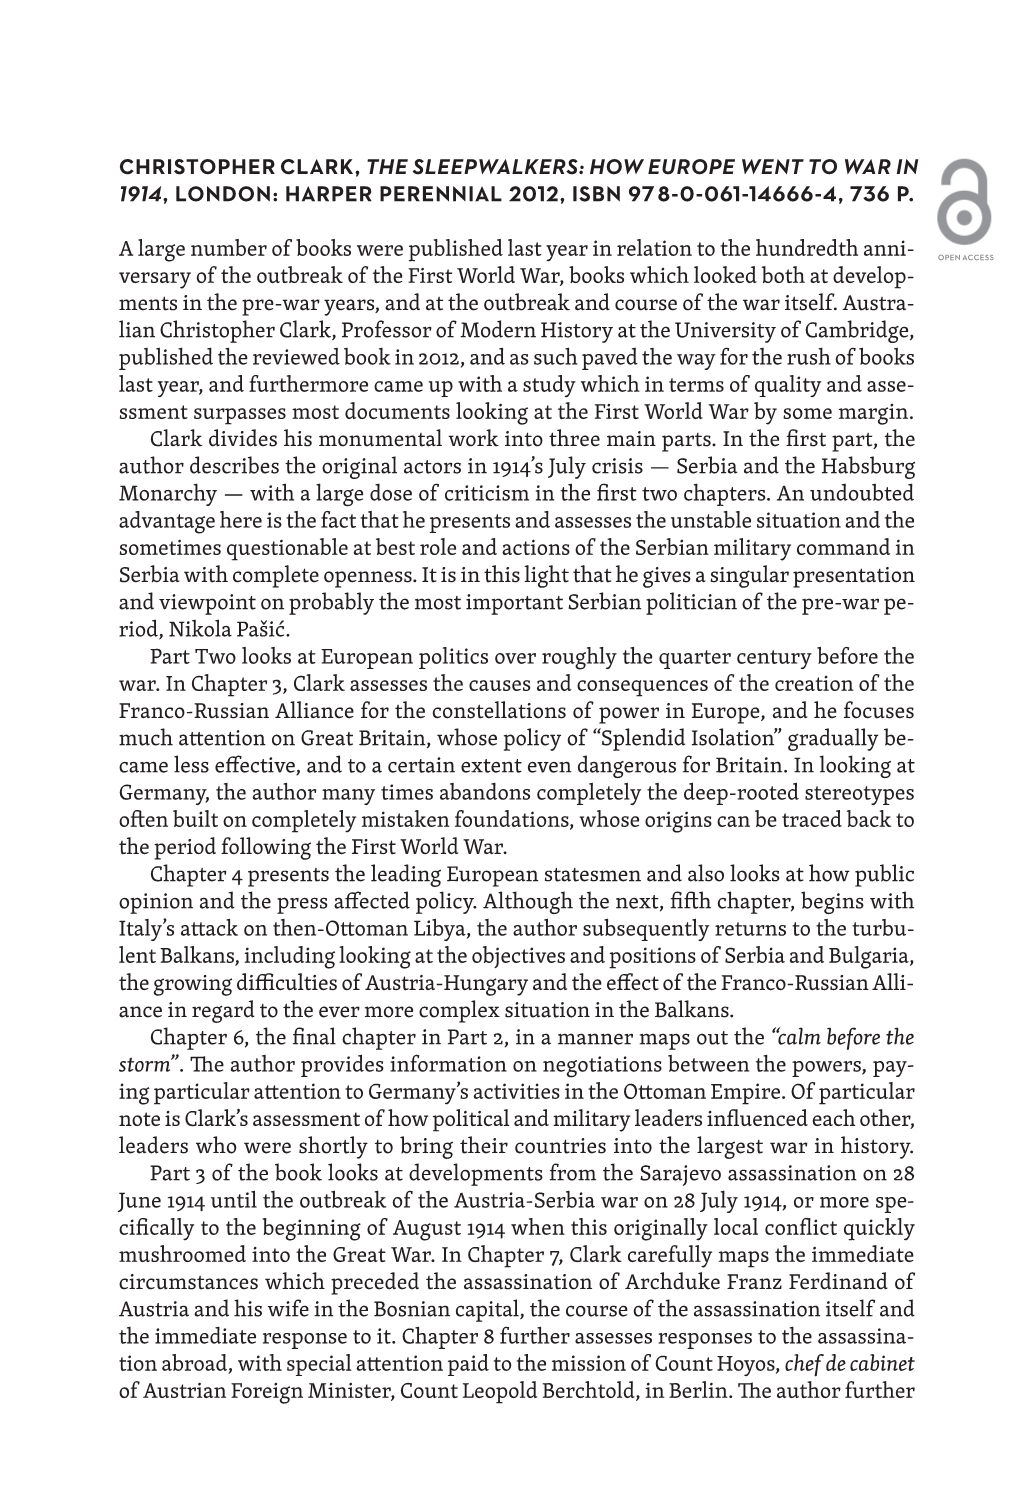 Christopher Clark, the Sleepwalkers: How Europe Went to War in 1914, London: Harper Perennial 2012, Isbn 978-0-061-14666-4, 736 P